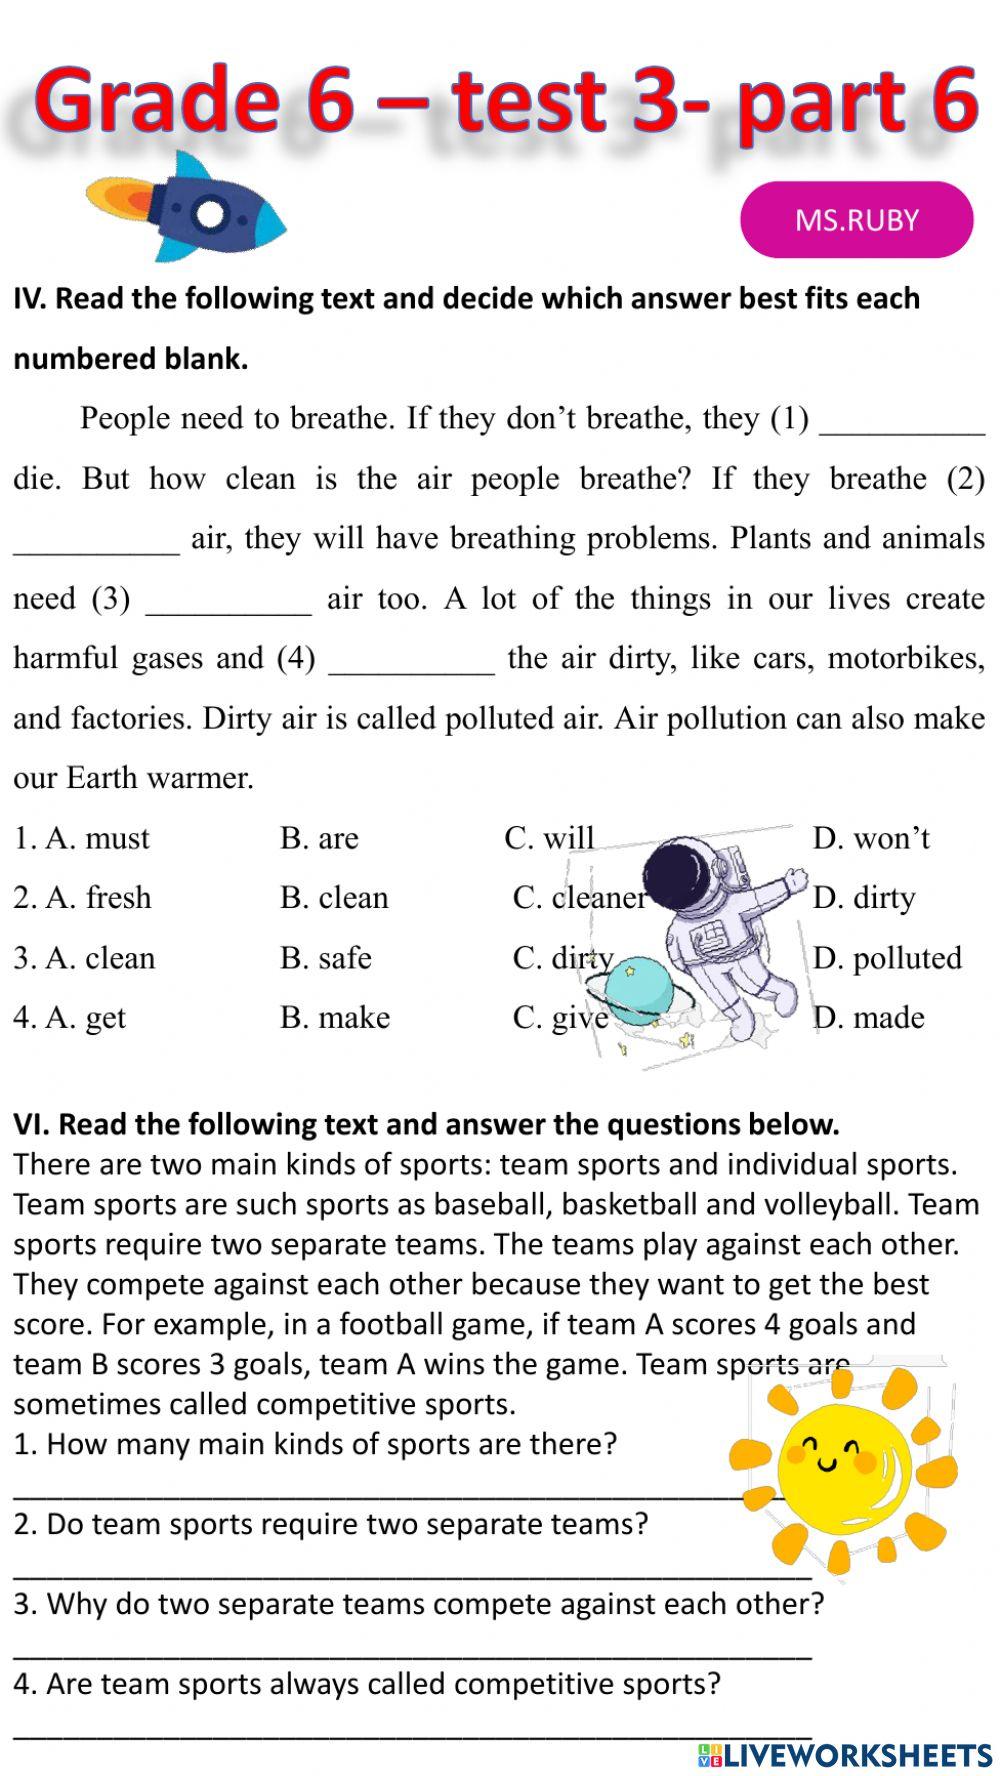 Grade 6 test 3 part 6